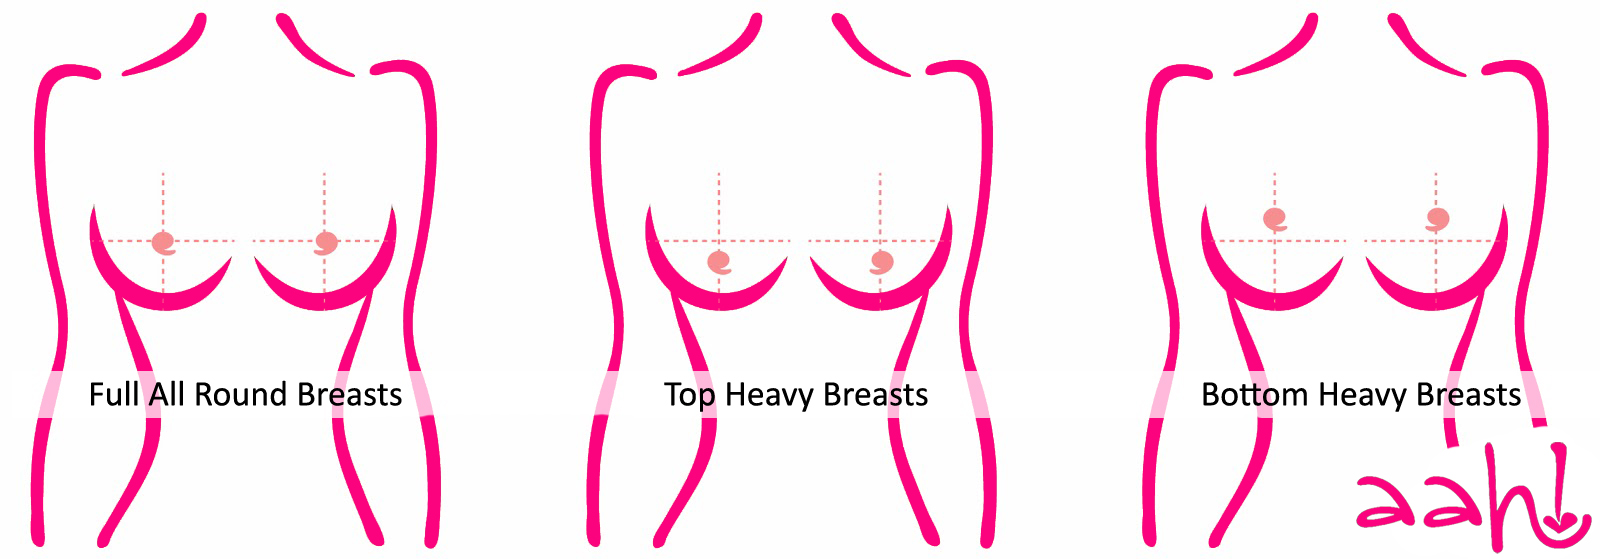 Breast Density